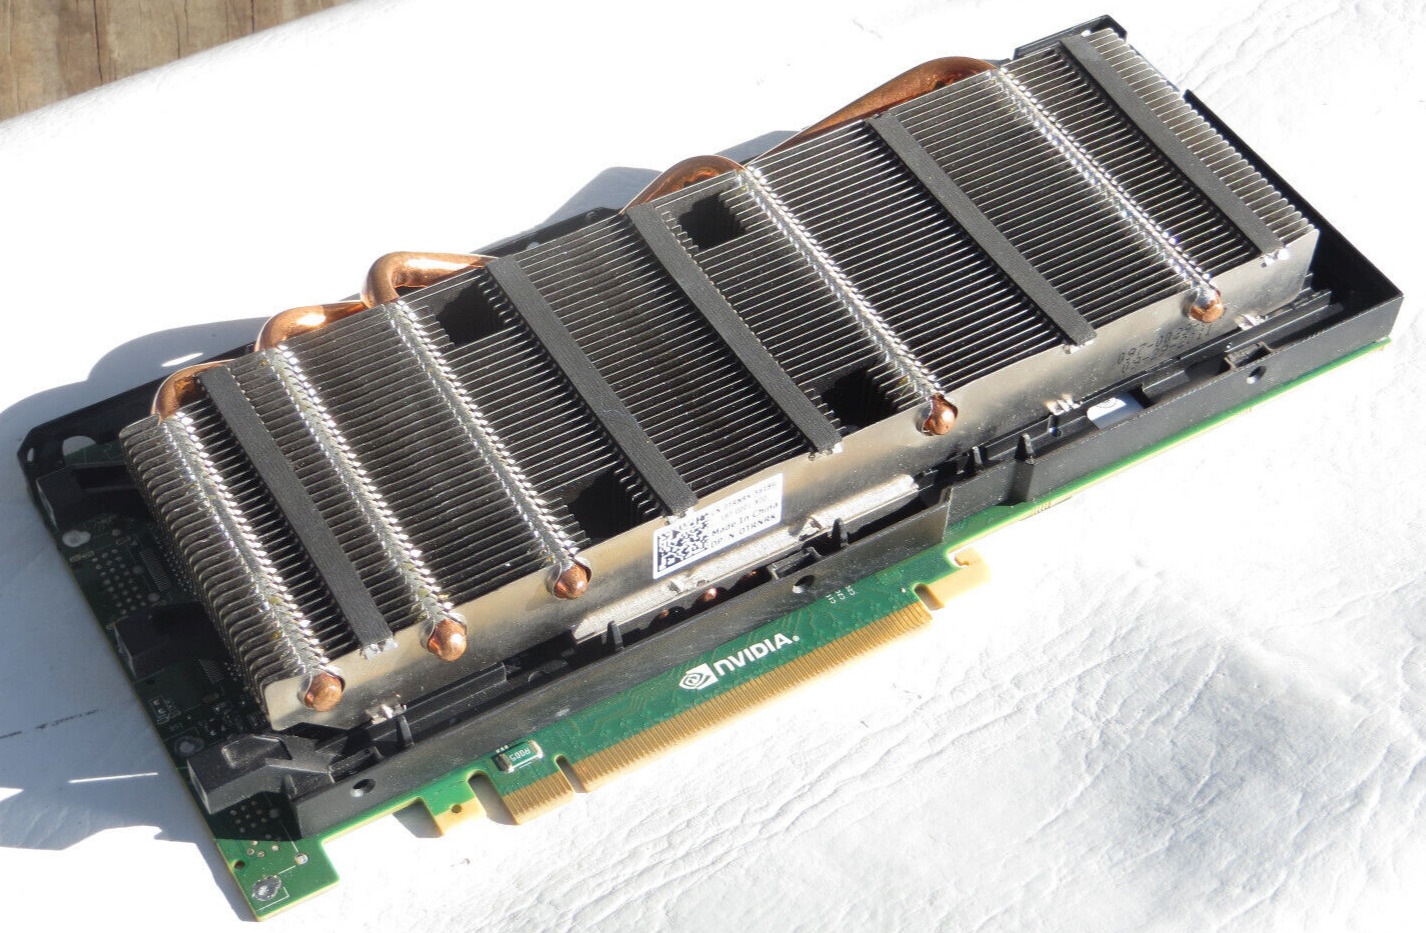 NVIDIA Tesla M2090 6GB Compute Accelerator PCI Express GPU